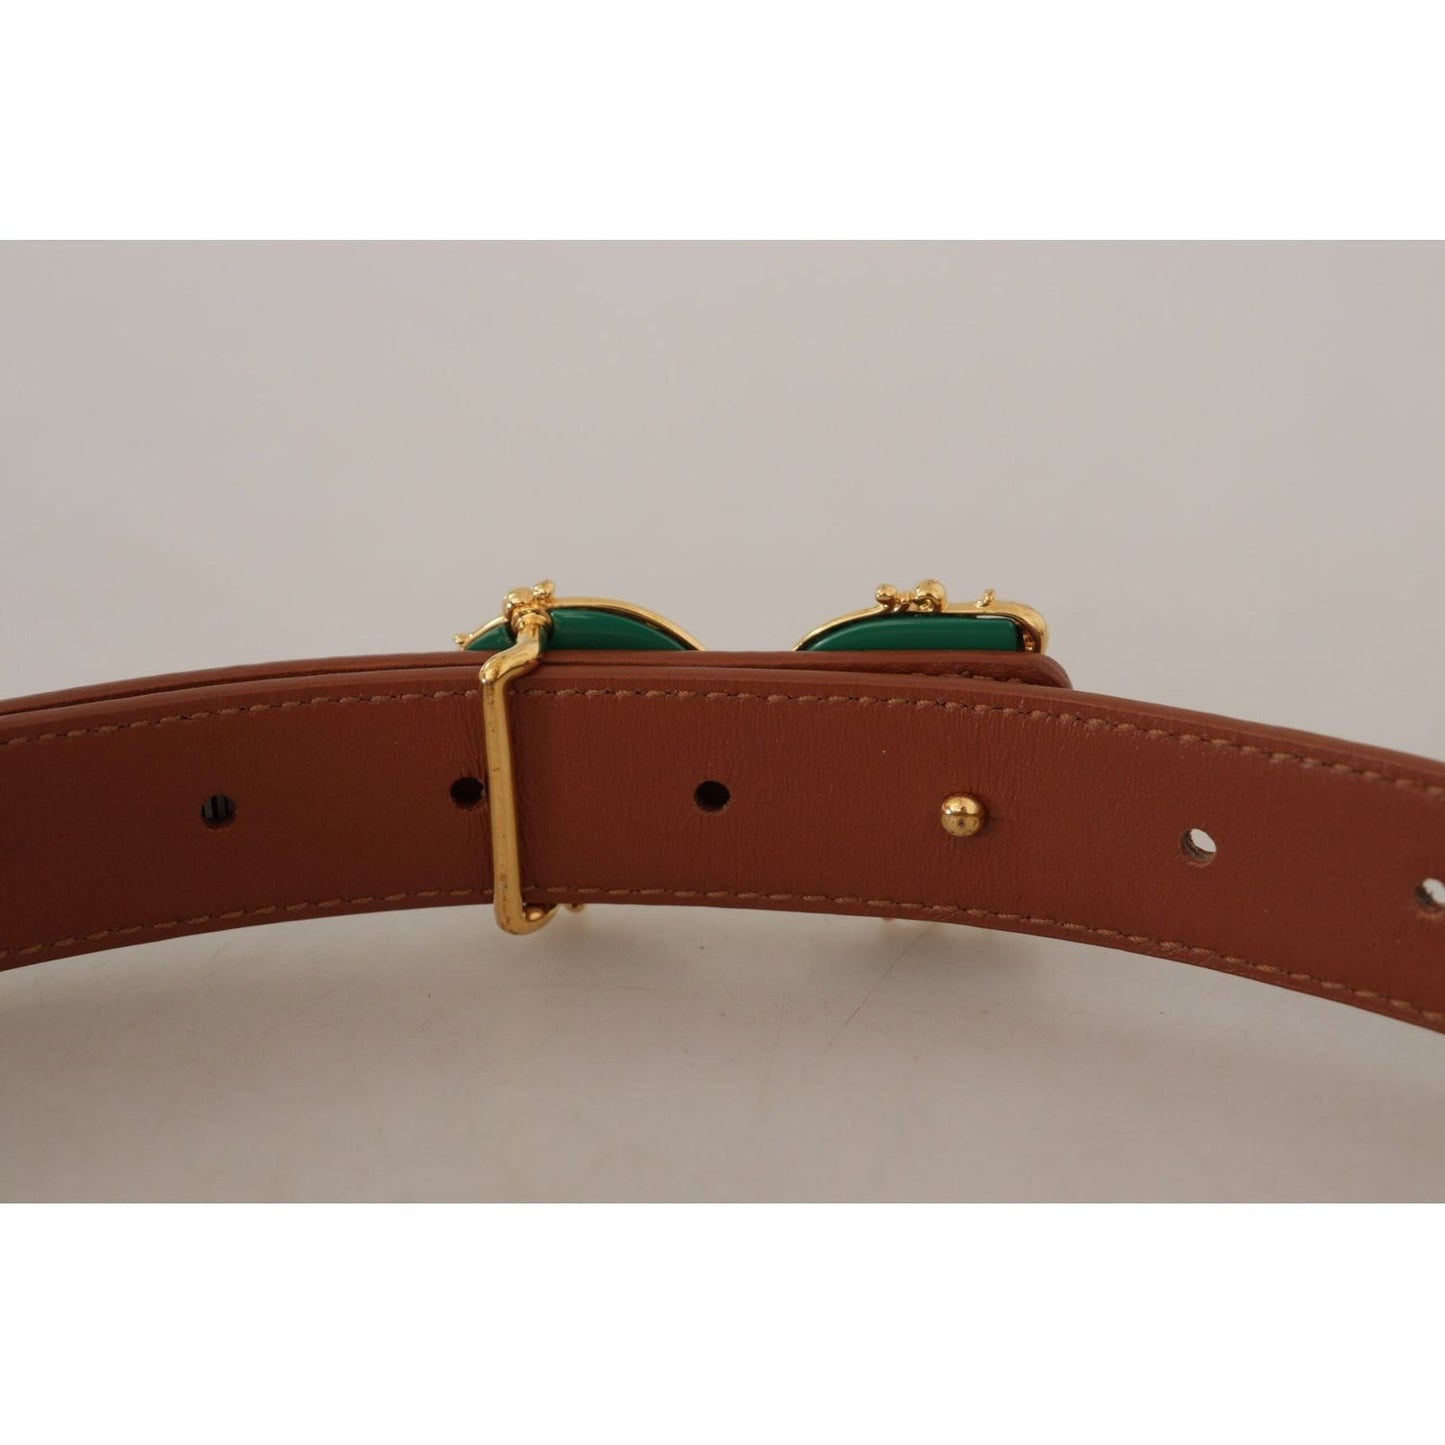 Dolce & Gabbana Elegant Leather Belt with Logo Buckle brown-leather-baroque-gold-dg-logo-waist-buckle-belt IMG_8928-scaled-5e480b4c-b05.jpg